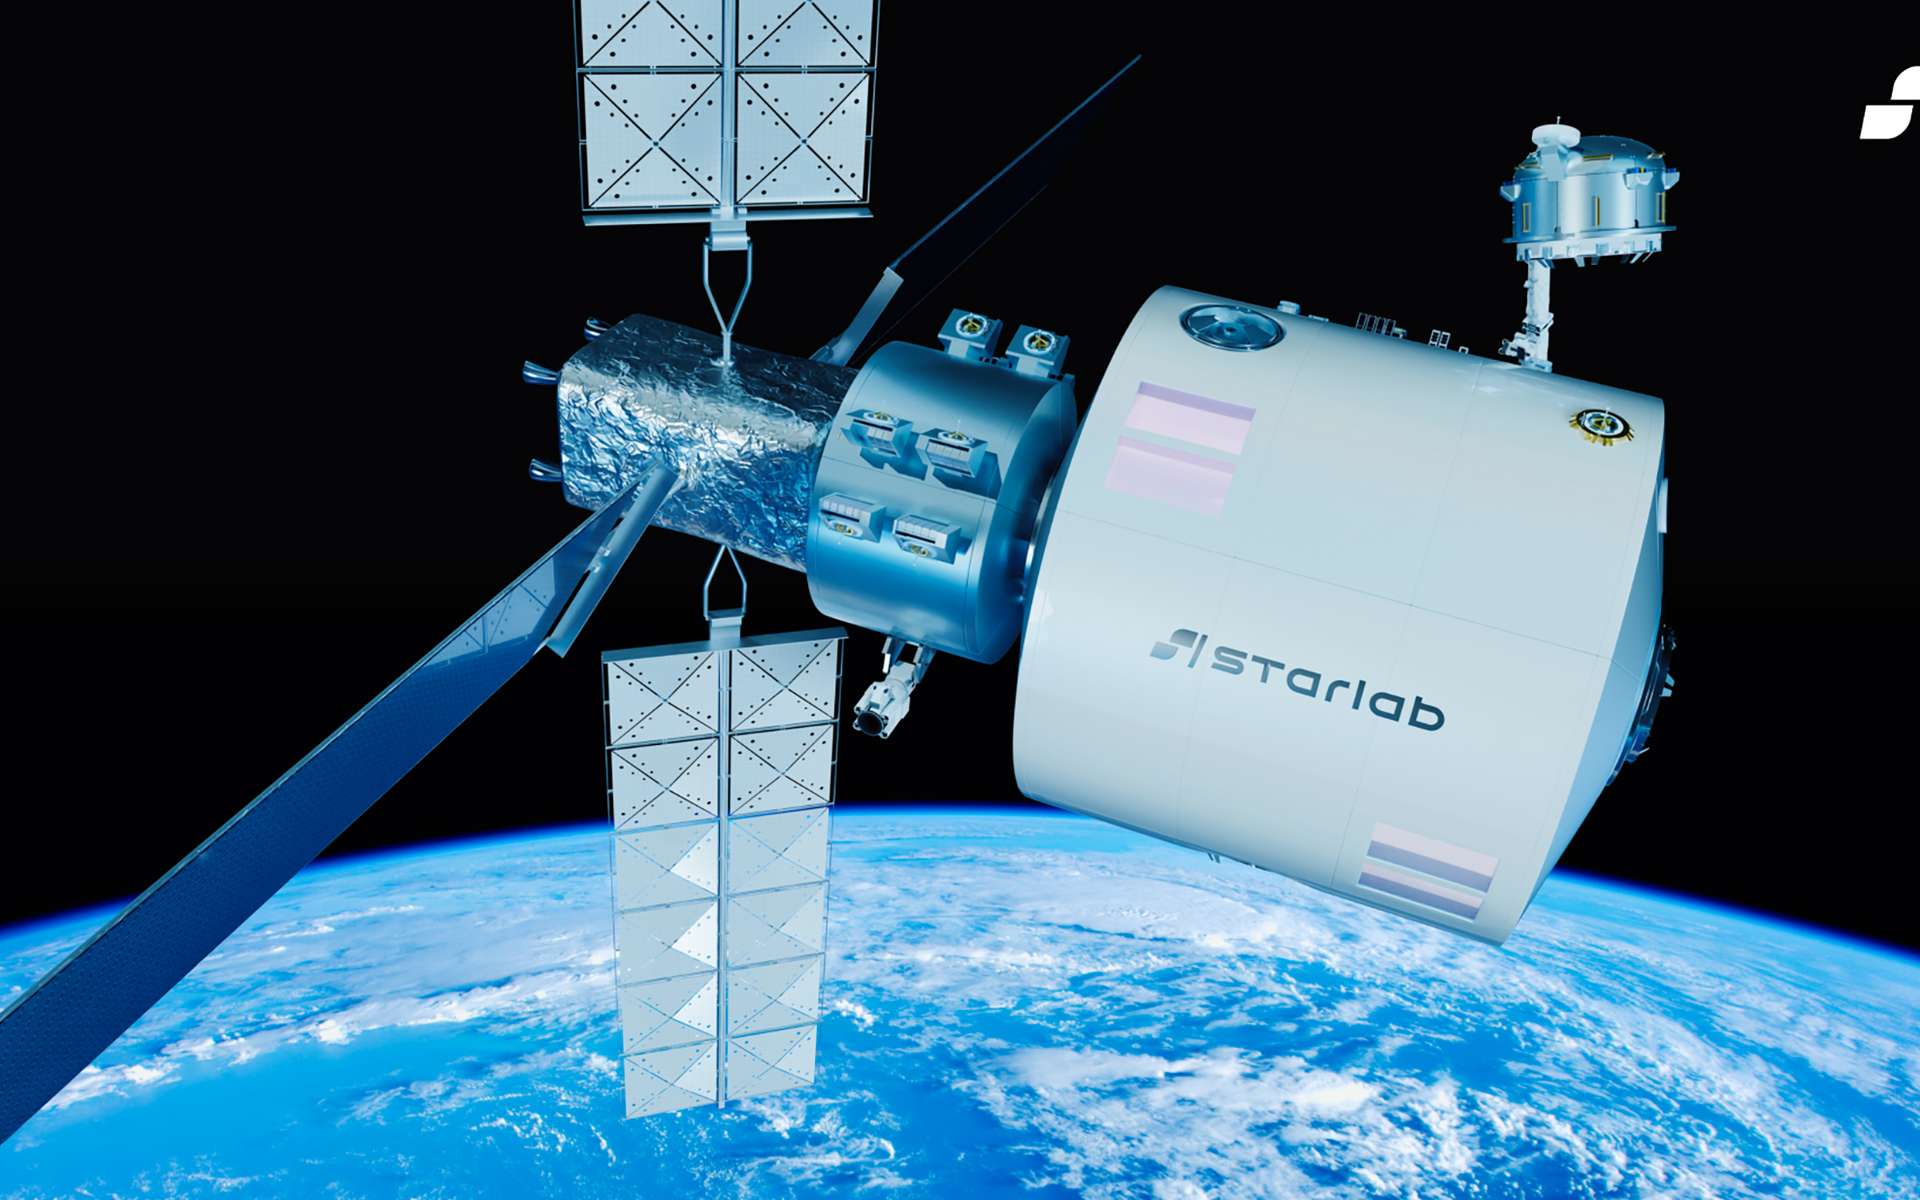 Airbus va construire une station spatiale pour la Nasa